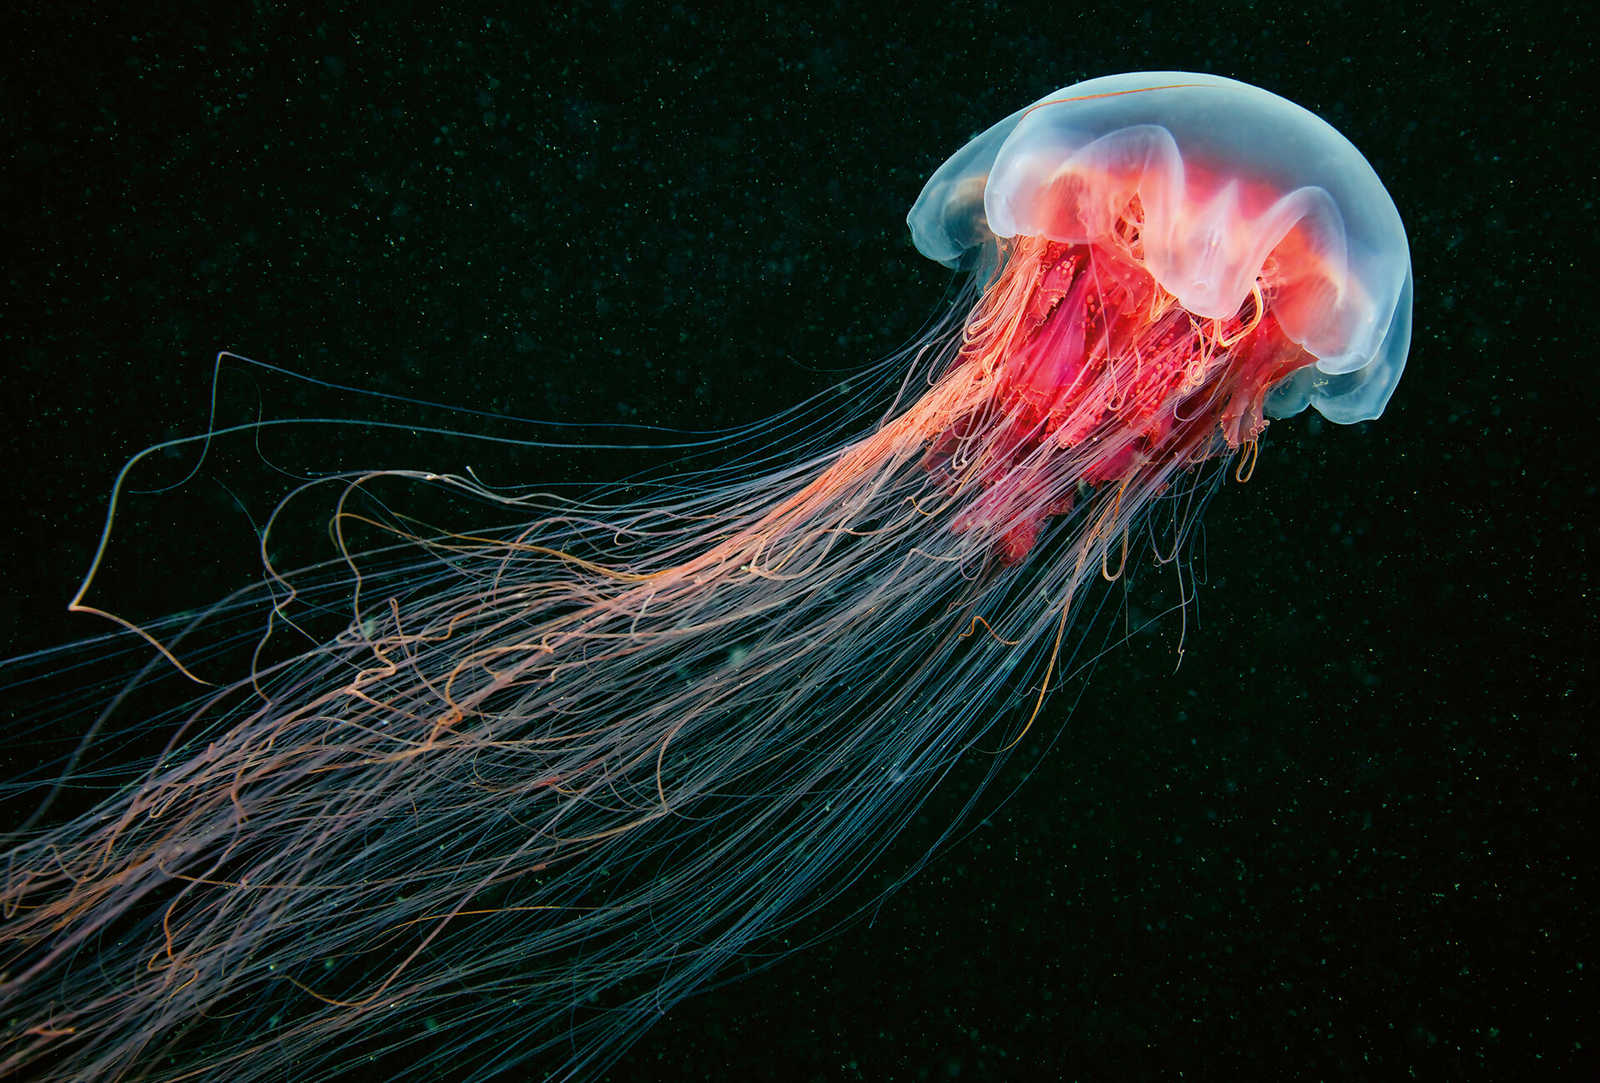         Photo wallpaper luminous jellyfish in water - blue, red
    